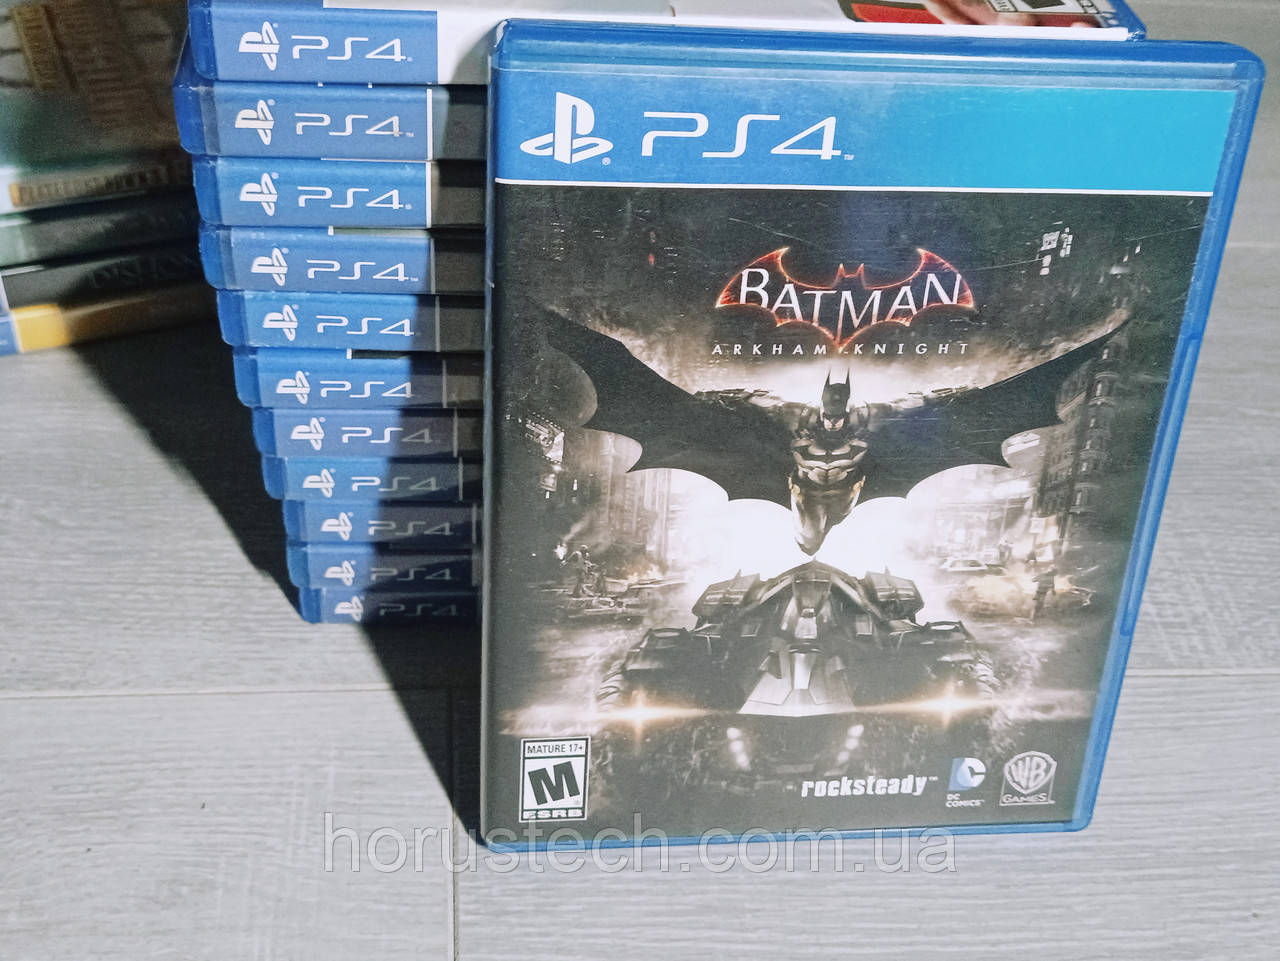 Диск с грою Batman: Arkham Knight для Playstation 4 (PS4)